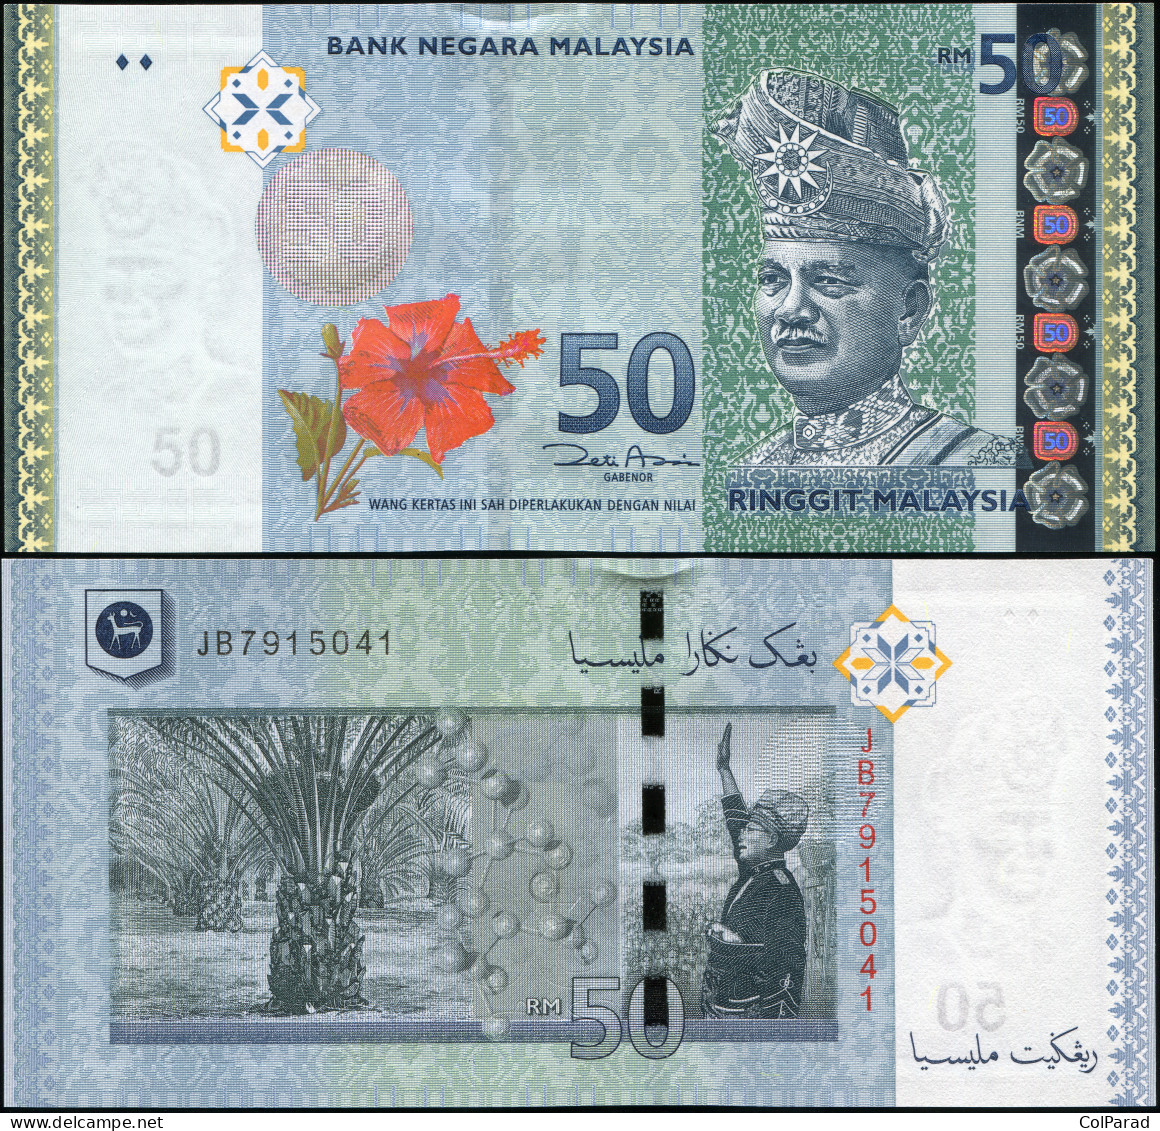 MALAYSIA 50 RINGGIT - ND (2009) - Paper Unc - P.50a Banknote - Malasia